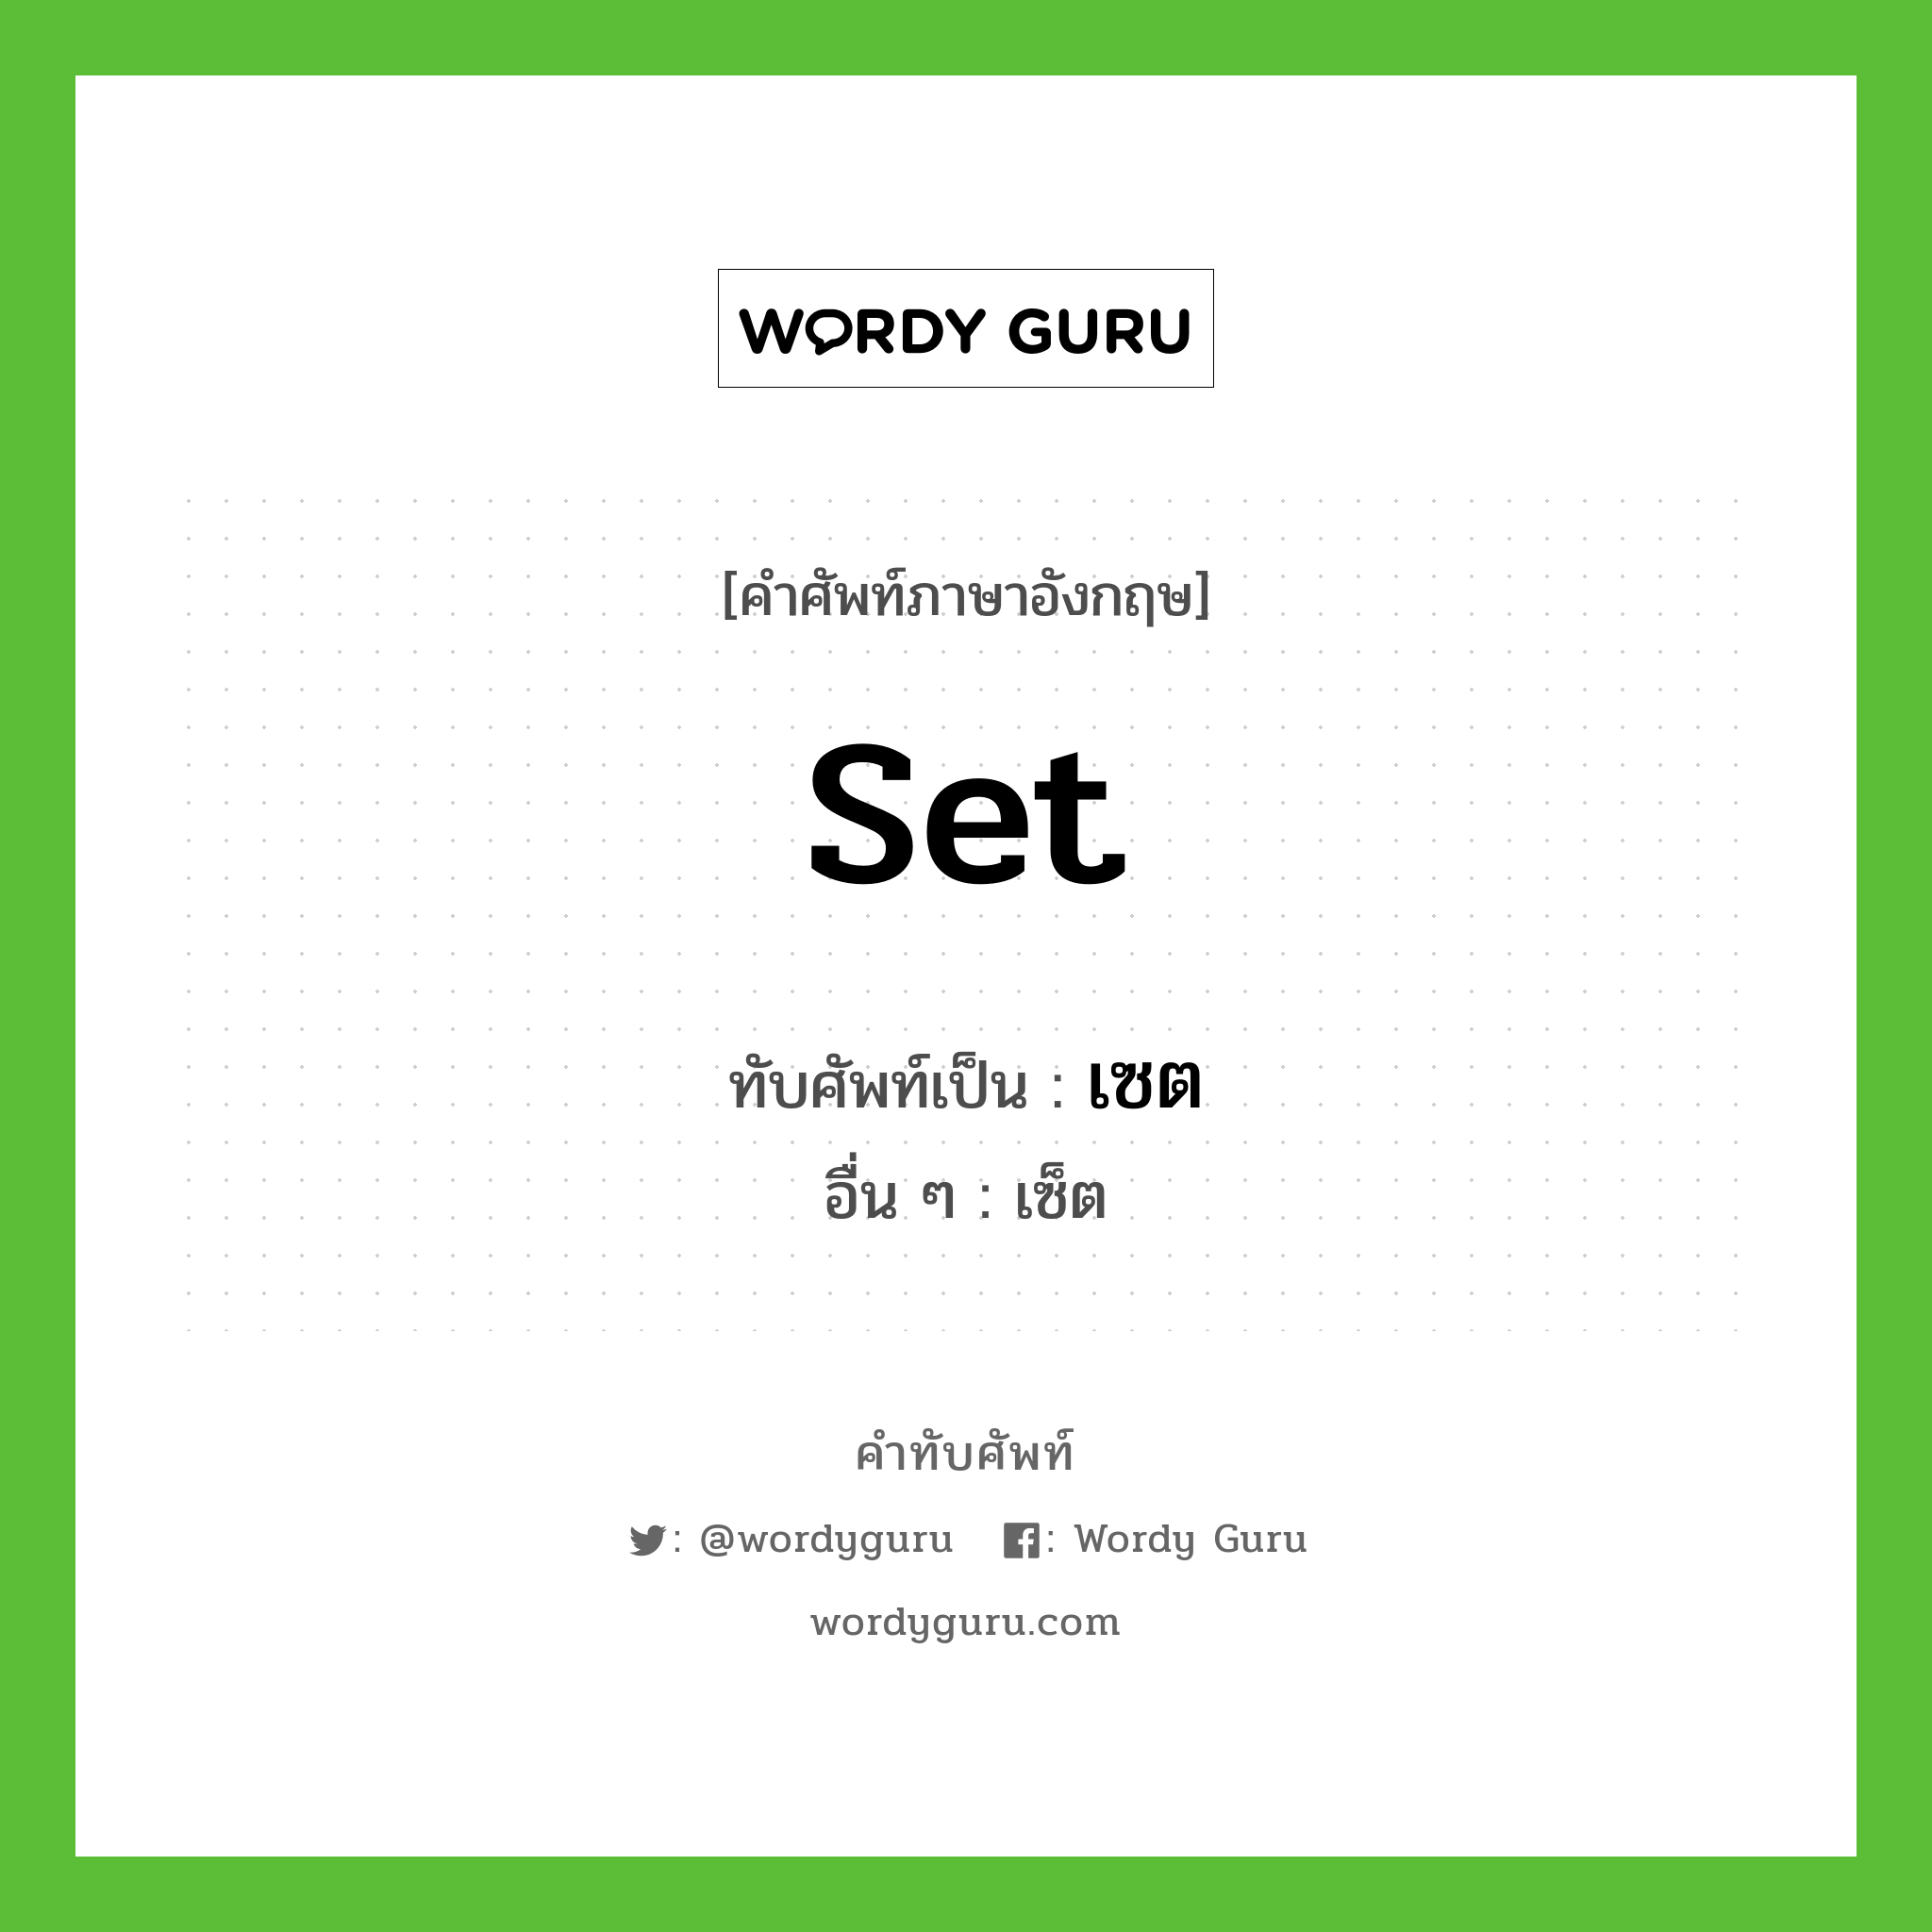 Set เขียนเป็นคำไทยว่าอะไร? | Wordy Guru